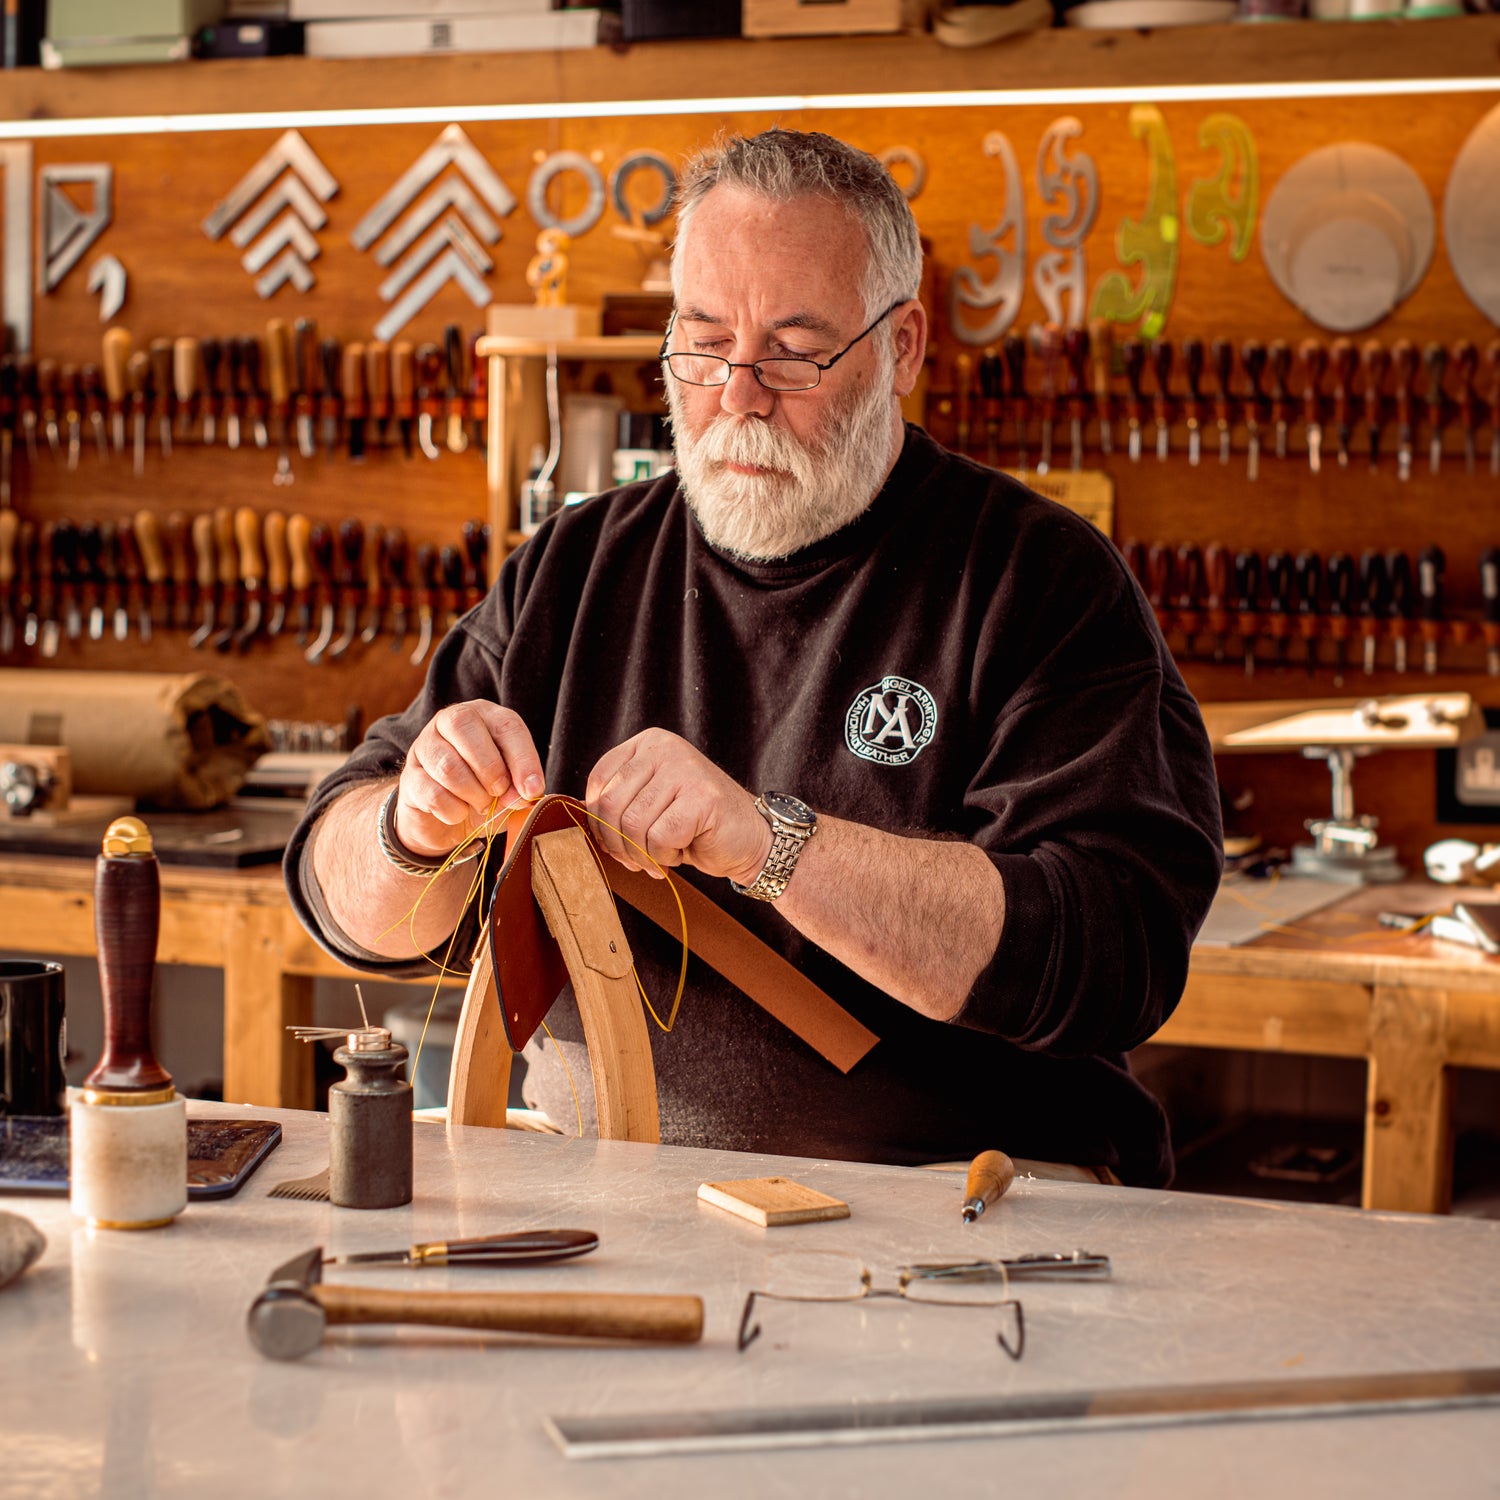 Picture of Nigel Armitage at work in his leatherworkshop.